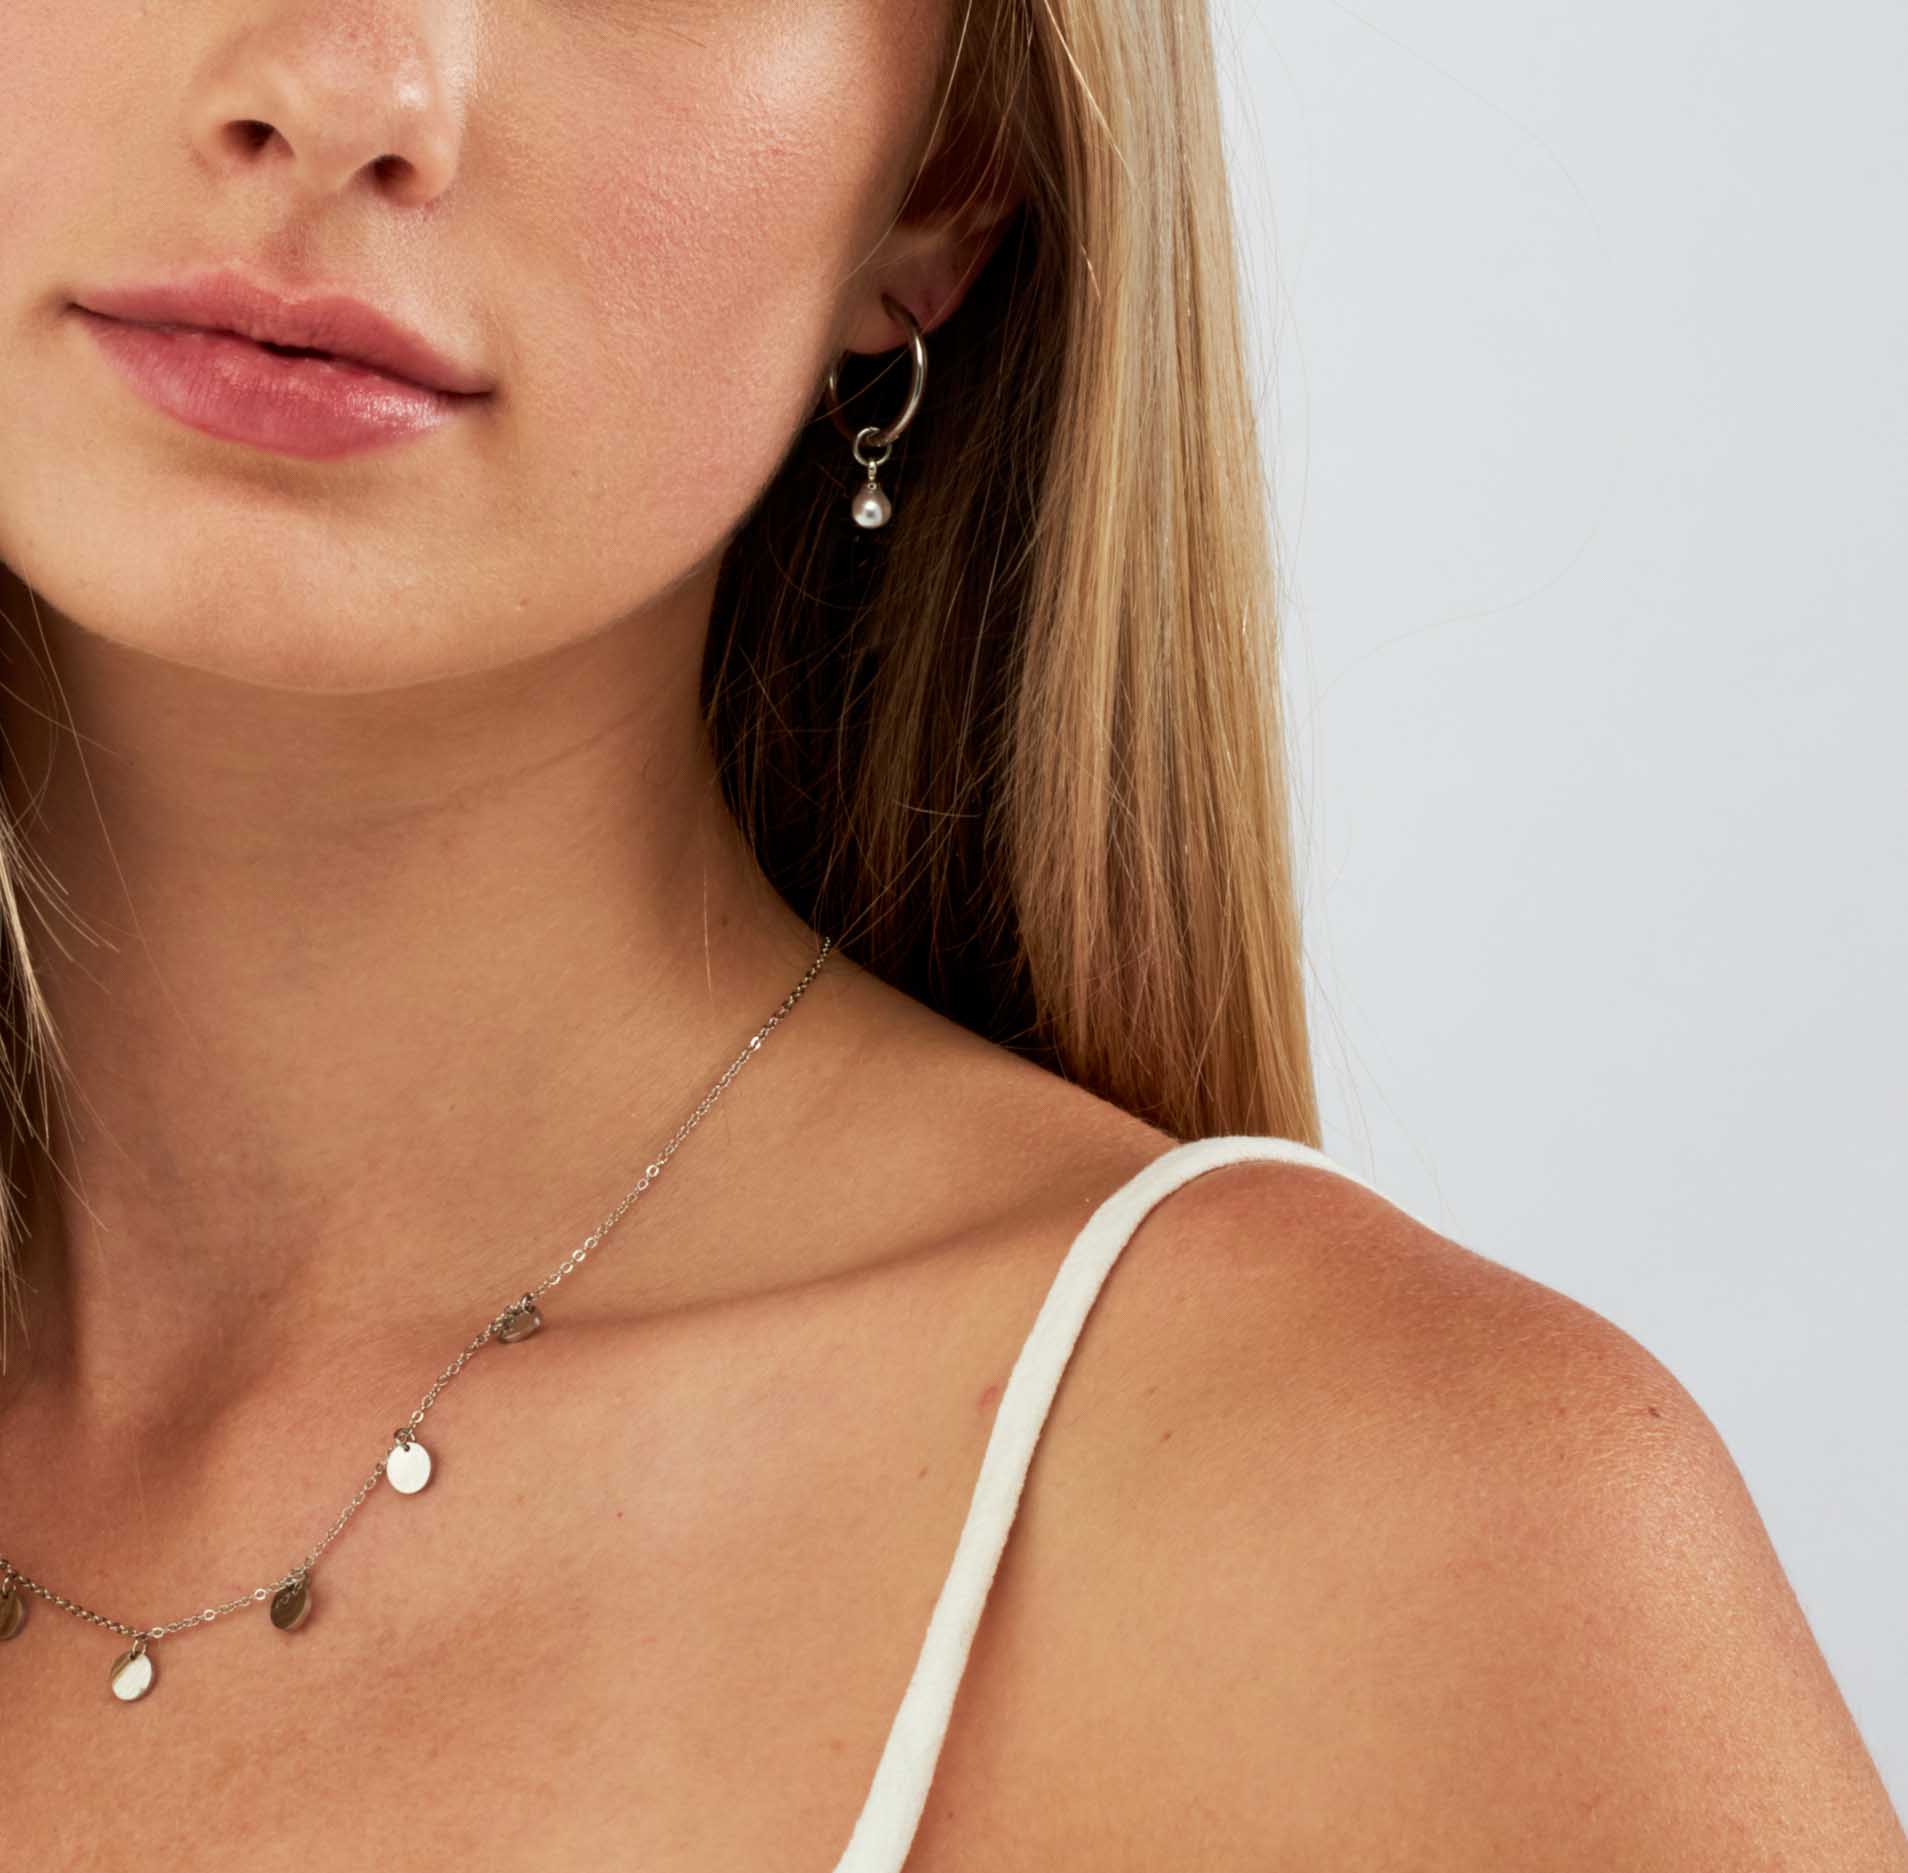 Pearl Hoops - Silver Earrings - Ocean Wave Jewelry